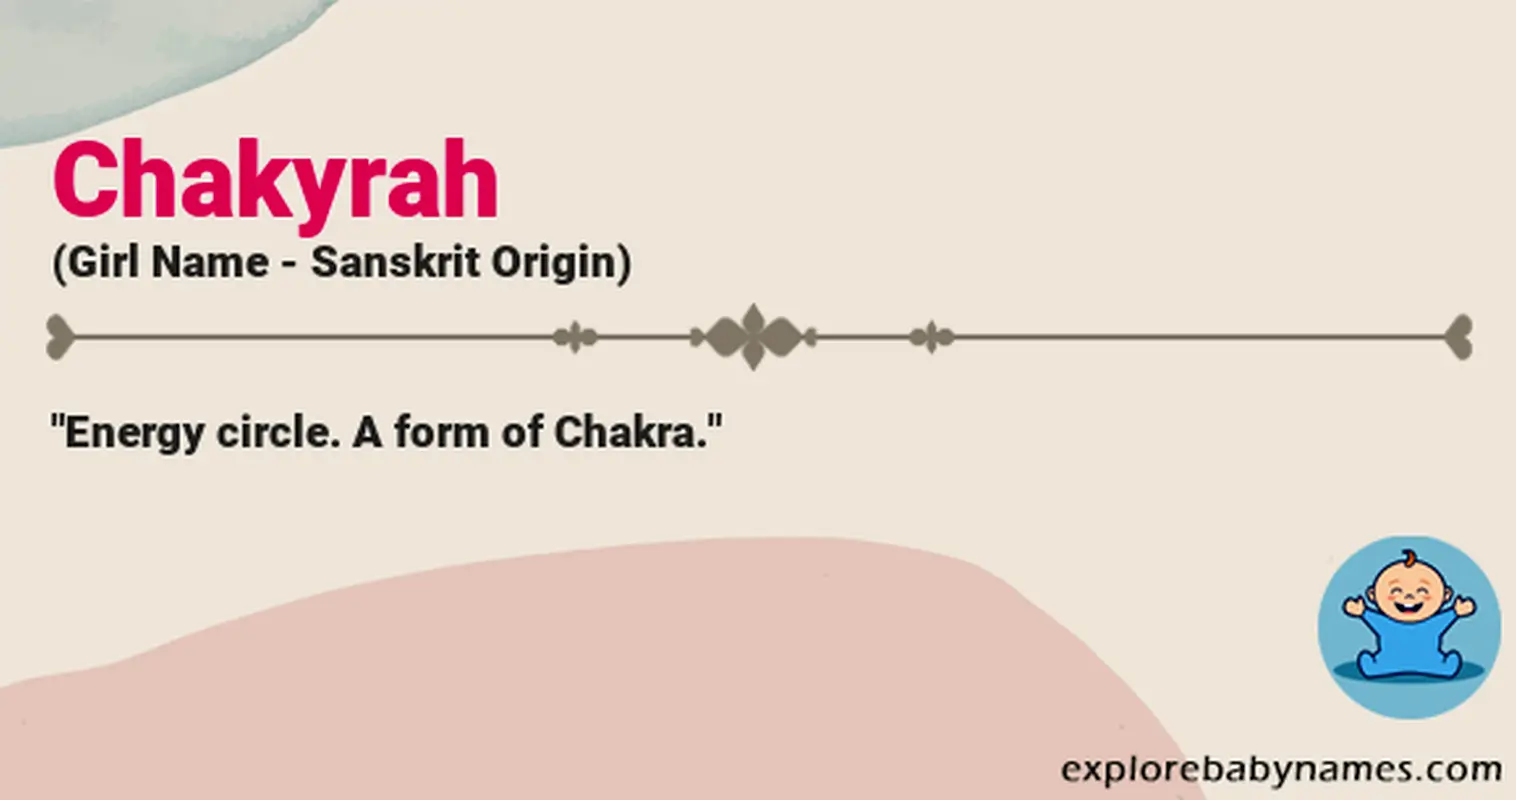 Meaning of Chakyrah